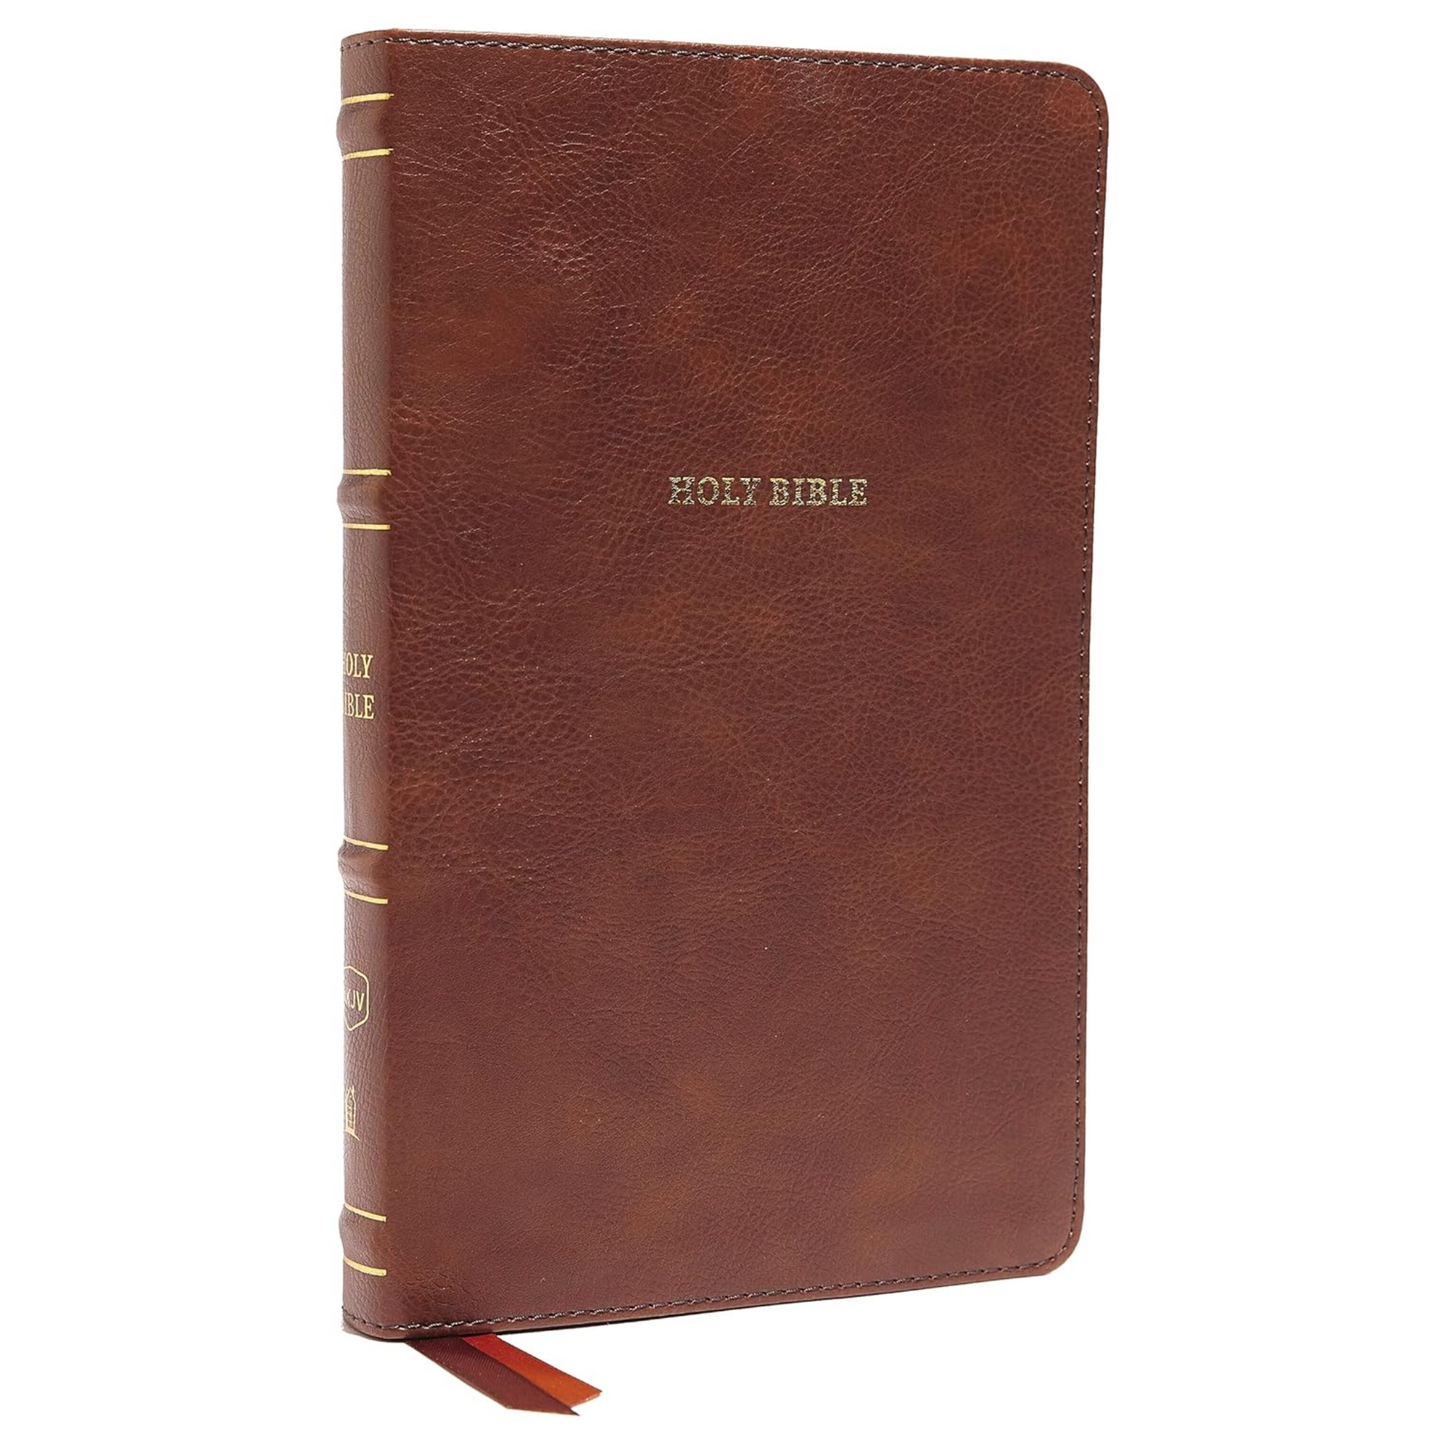 NKJV Thinline Bible